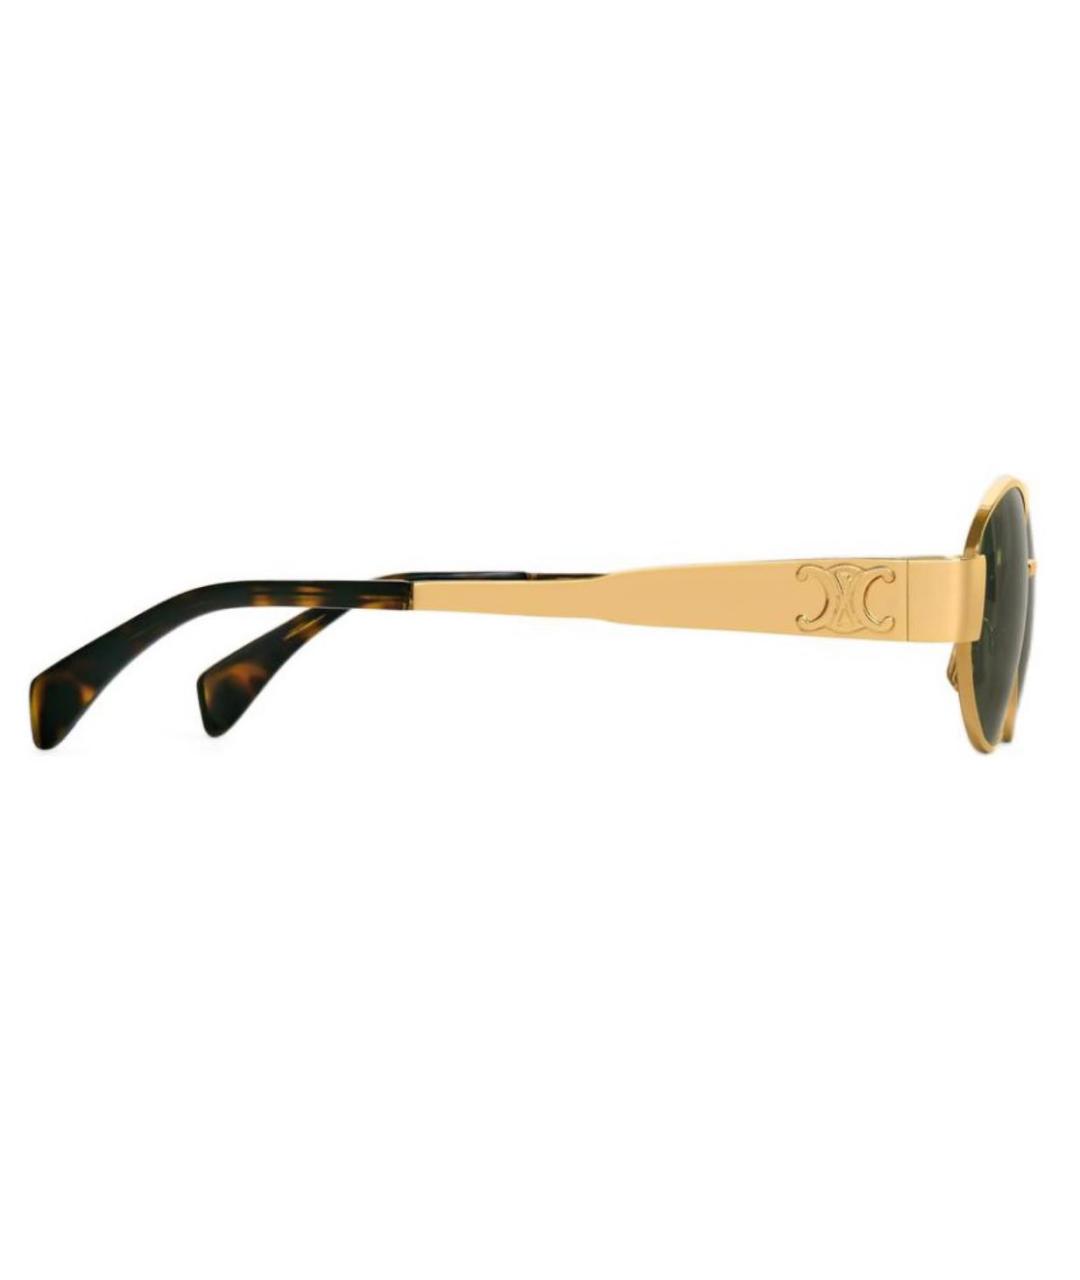 CELINE PRE-OWNED Золотые металлические солнцезащитные очки, фото 3